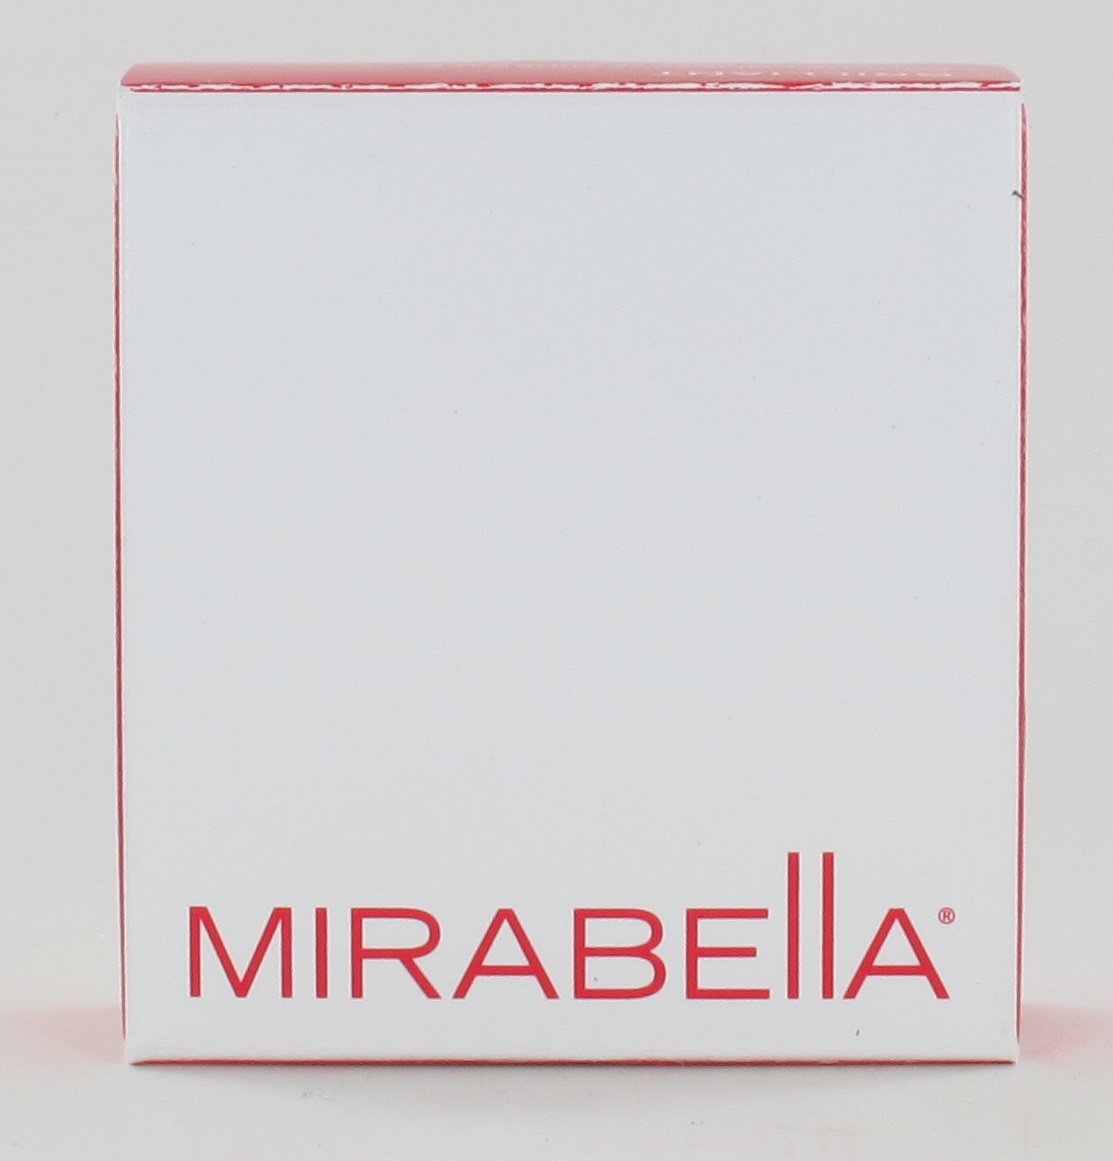 Mirabella Pure Press Mineral Powder Foundation 0.28 oz / 8 g - I